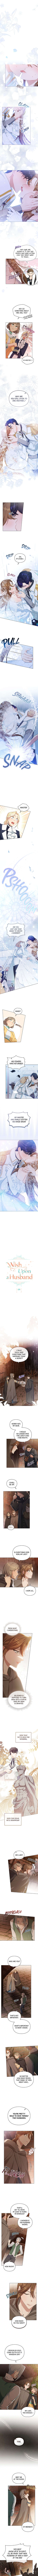 Wish Upon A Husband - Page 2